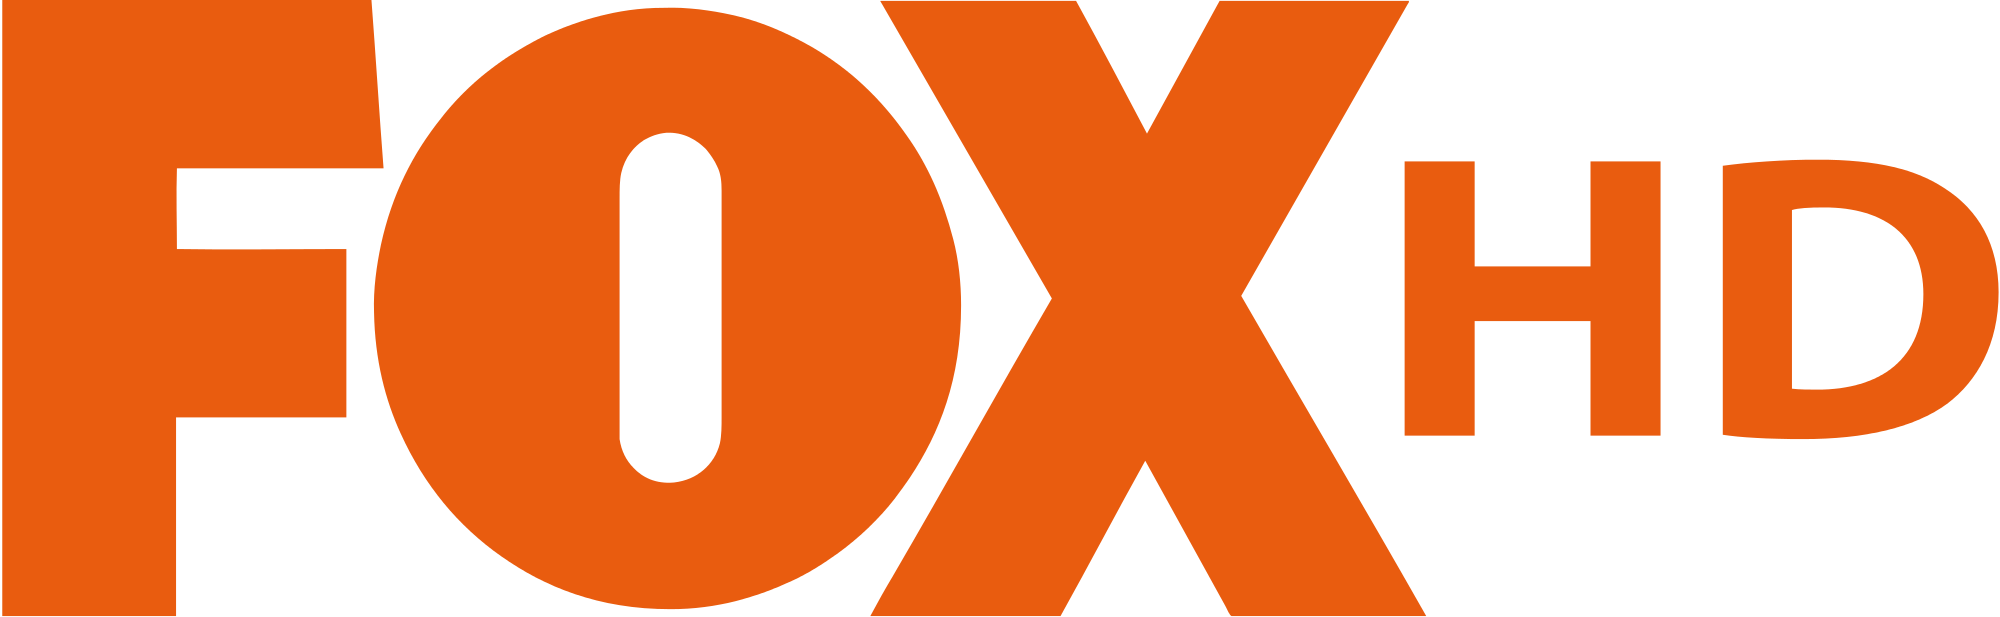 File:FOX HD.svg